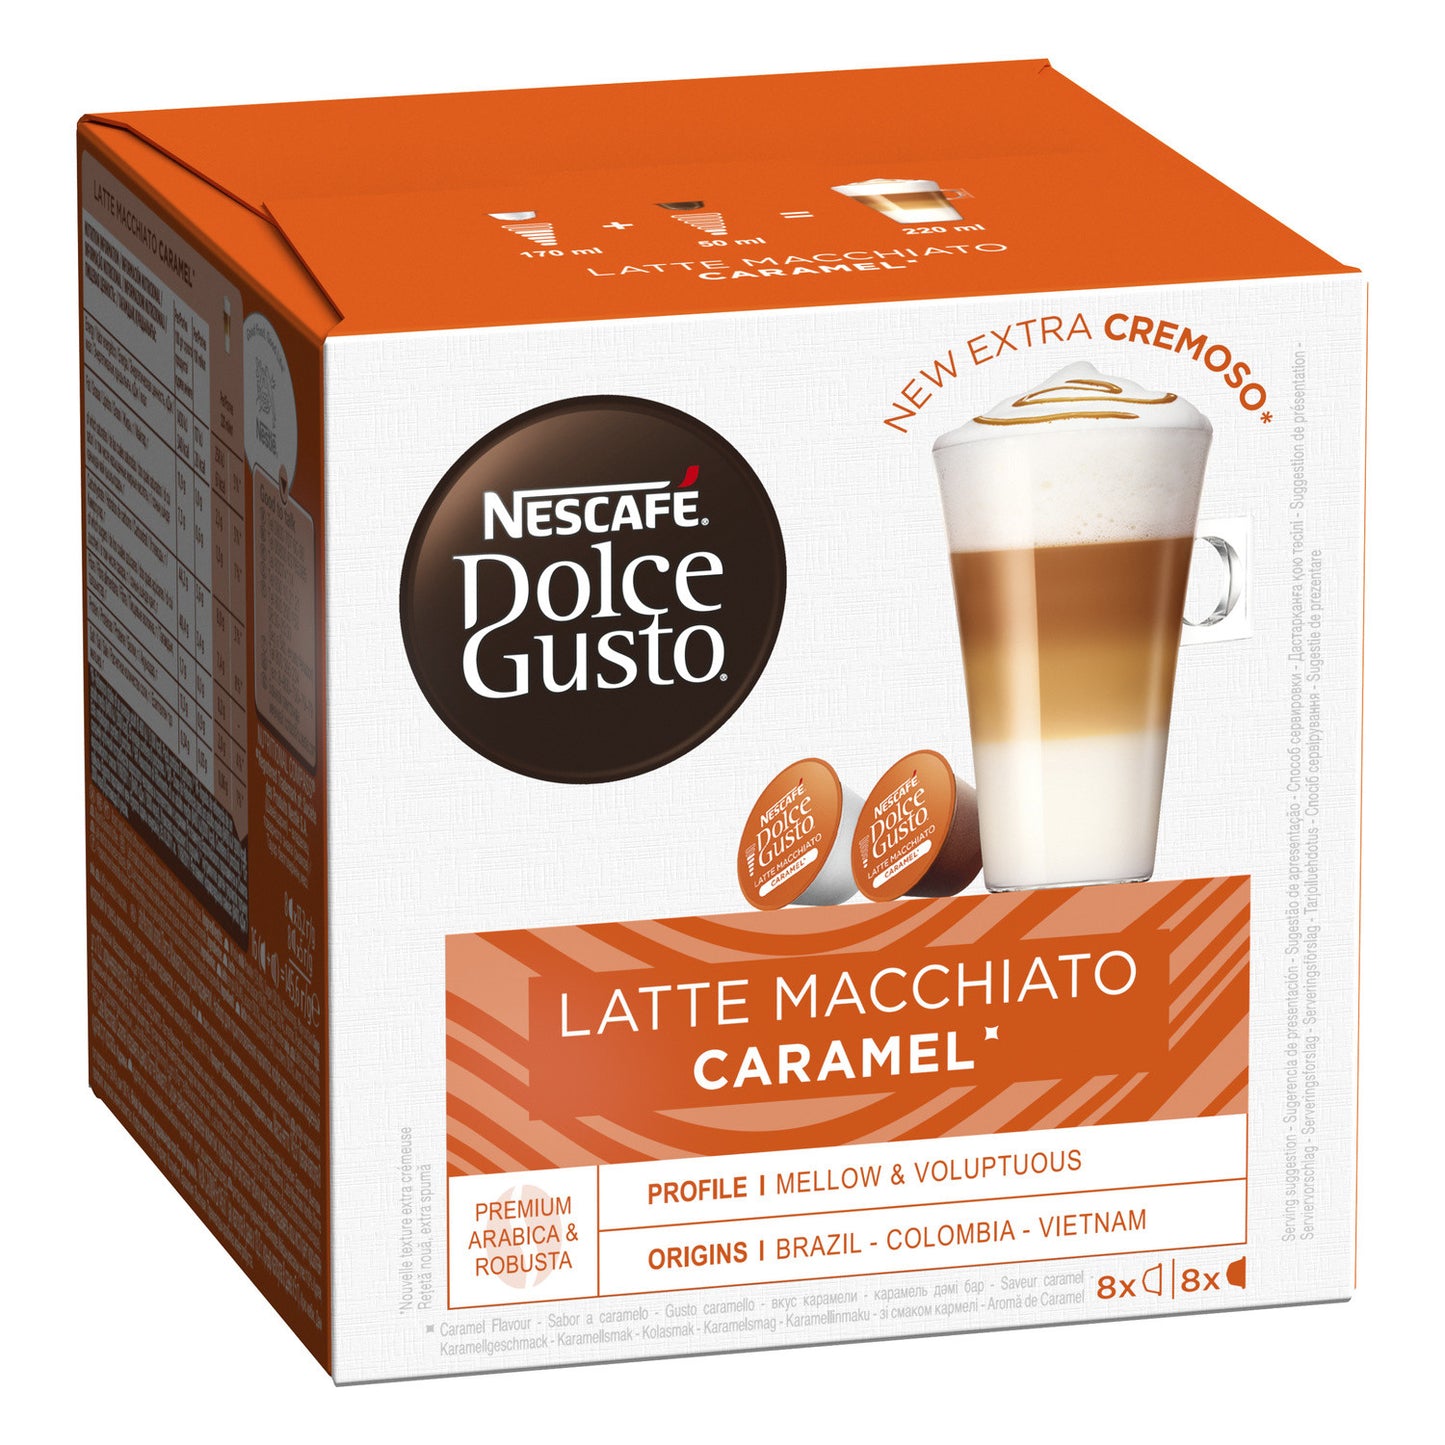 Dolce Gusto Cappuccino capsule de café 16 capsules – Mokashop Switzerland